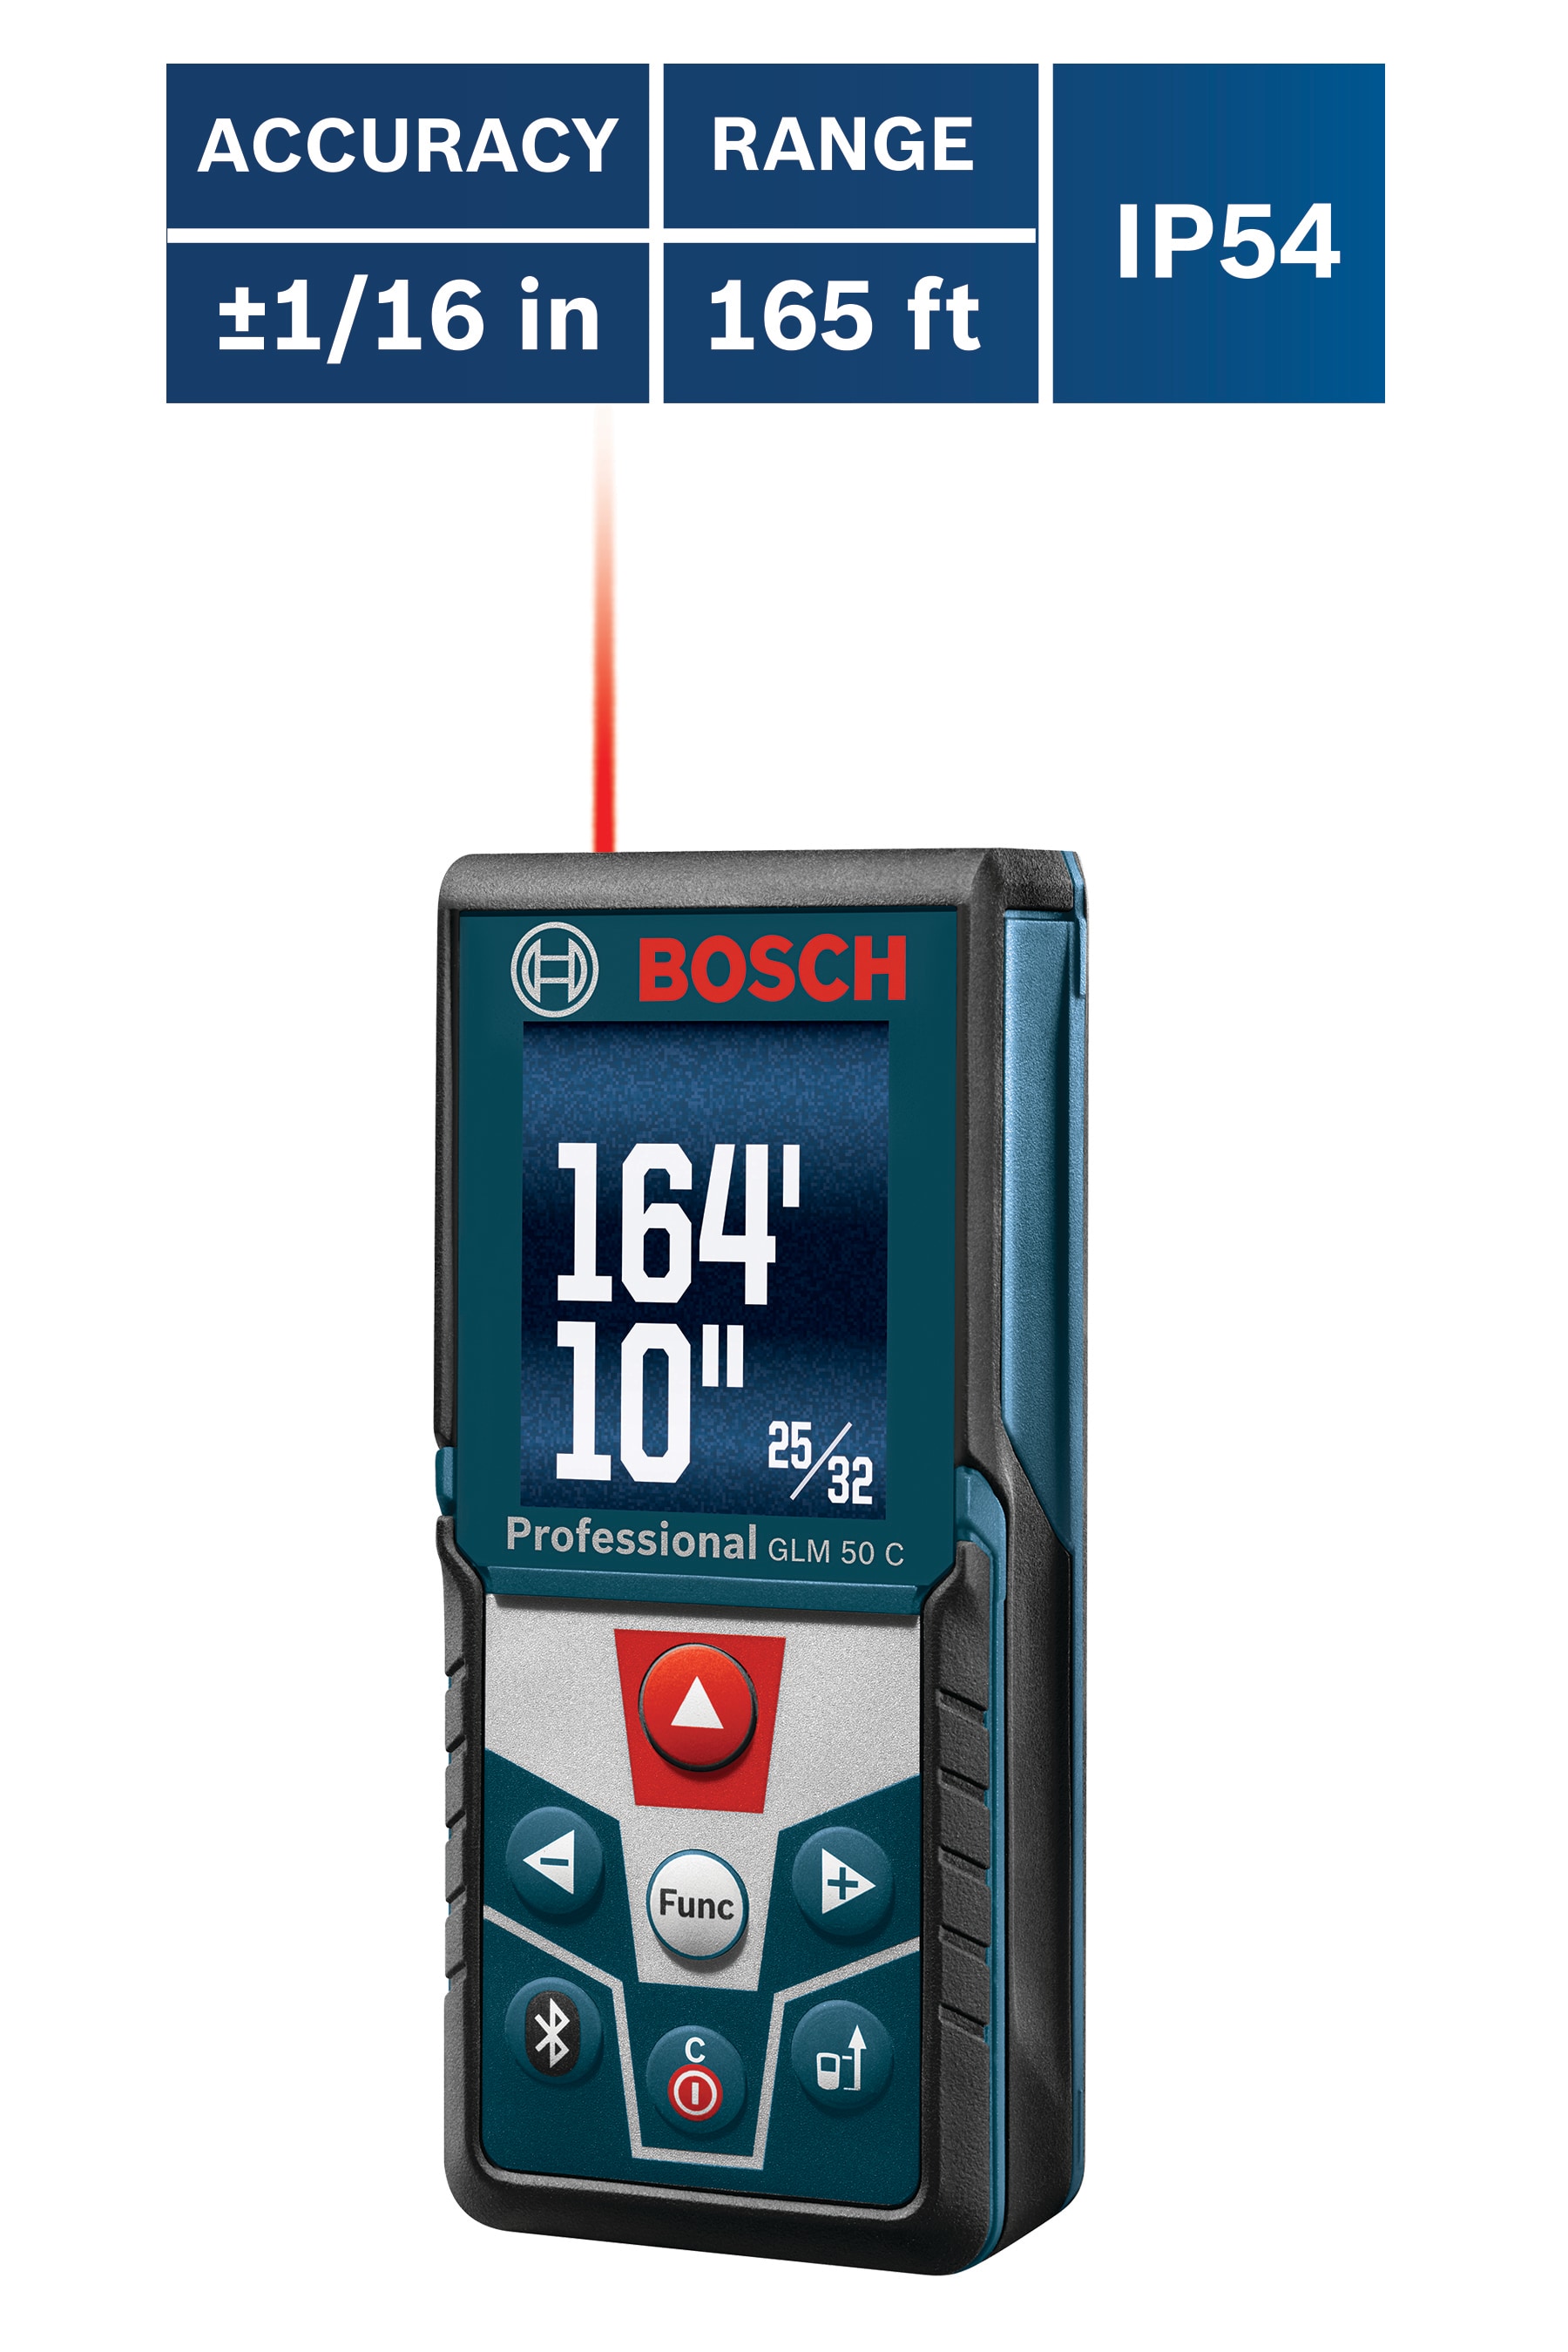 Bosch 50 c. Bosch GLM 50 C professional. Лазерный дальномер Bosch GLM 50с. Лазерный дальномер Bosch GLM 50 professional. Лазерный дальномер Bosch GLM 50-27 C professional 50 м.